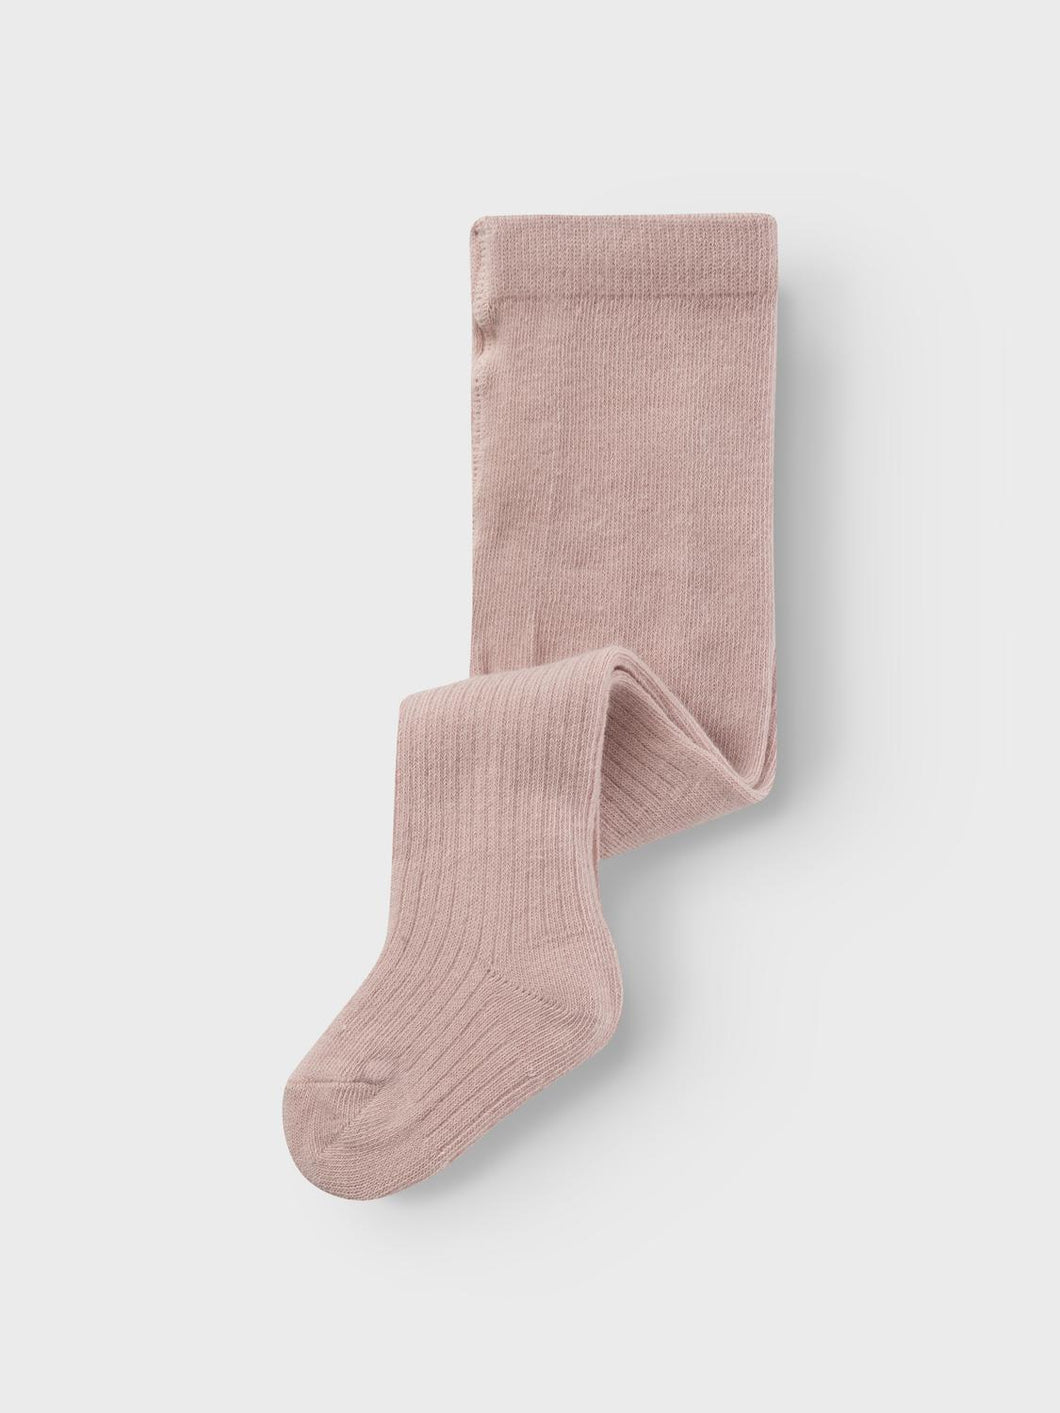 NBFNOBBA Socks - Sepia Rose